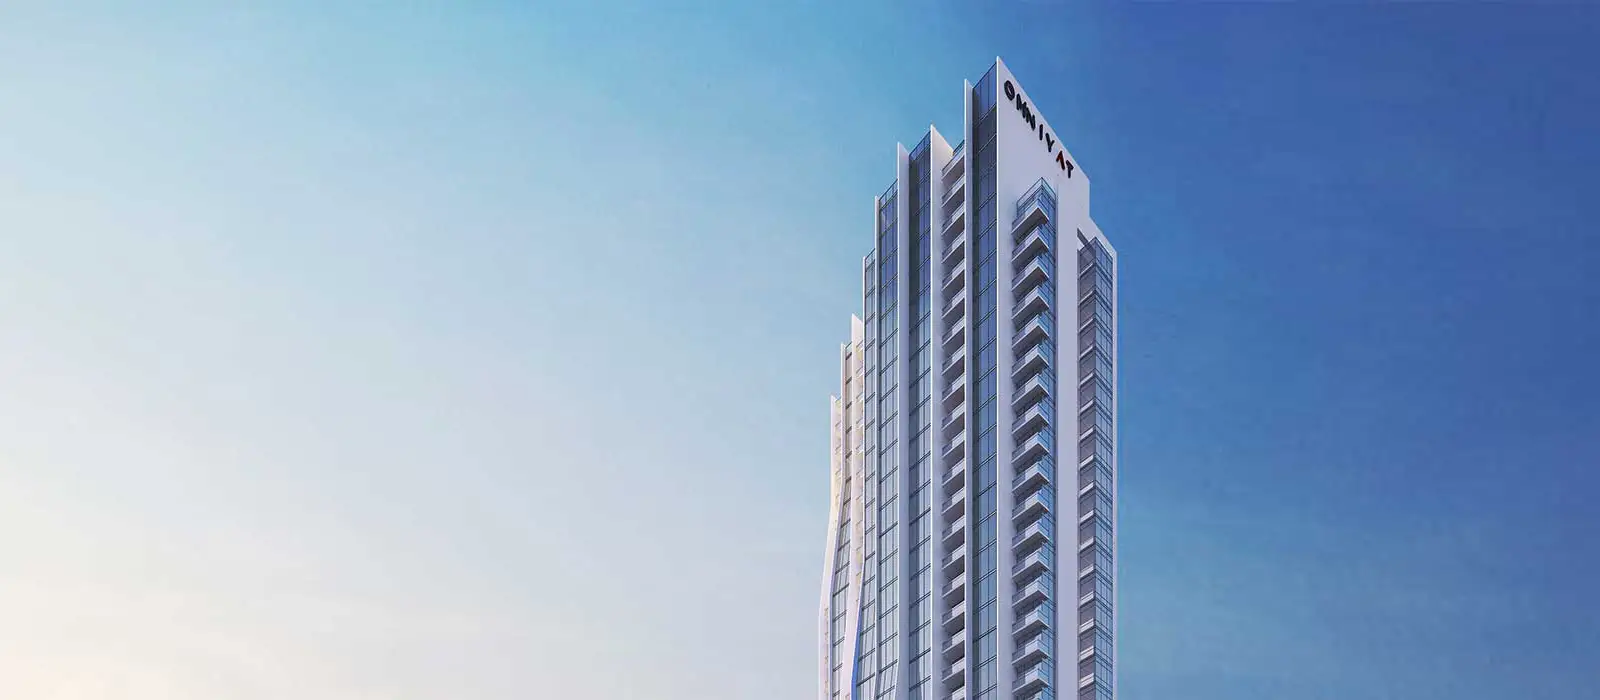 Omniyat Anwa 2 Luxury Tower at DMC Dubai